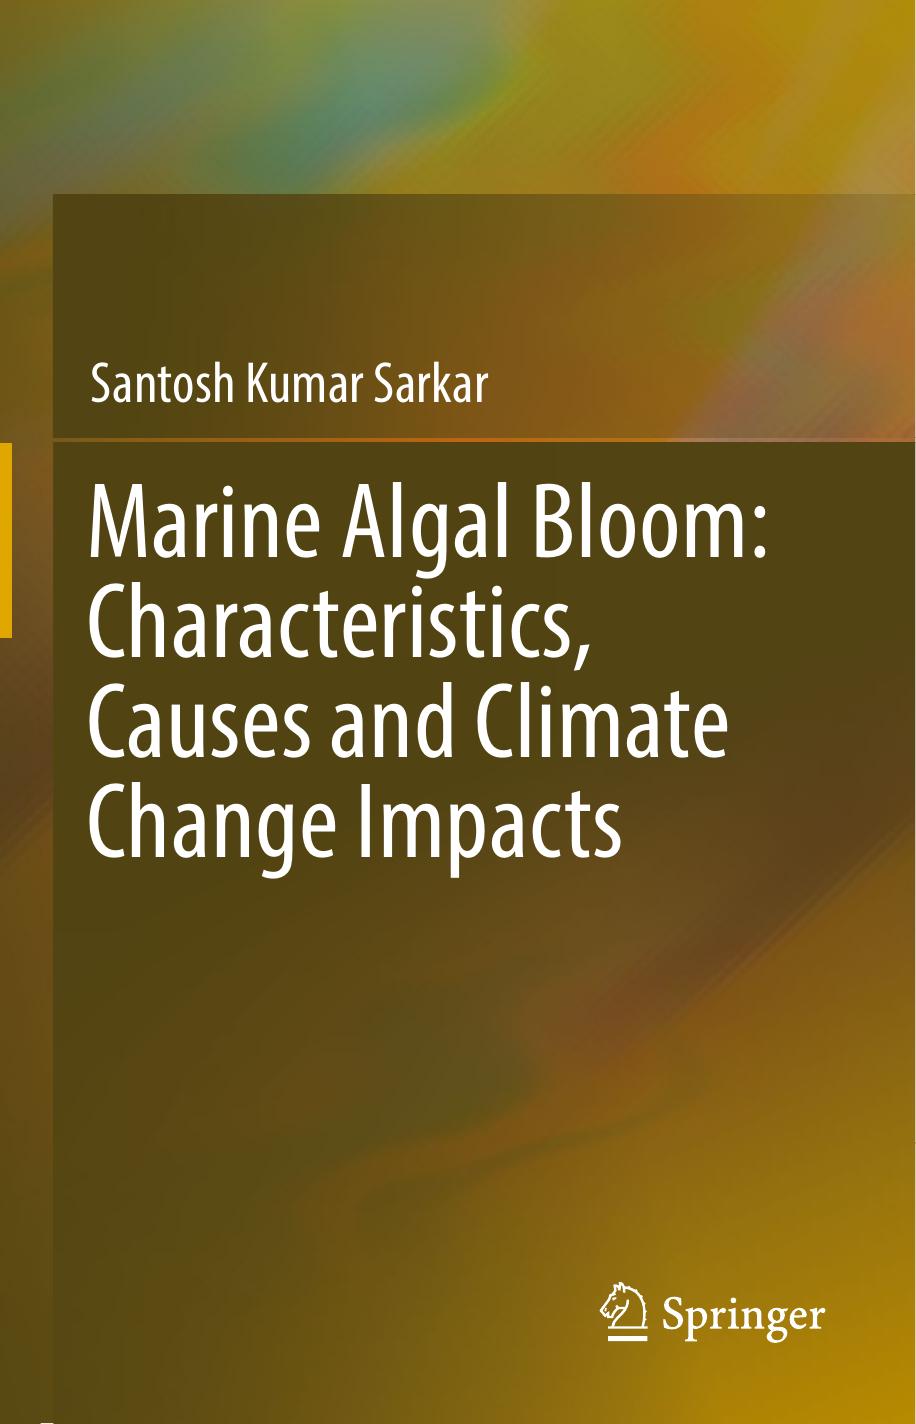 Marine Algal Bloom: Characteristics, Causes and Climate Change Impacts by Santosh Kumar Sarkar